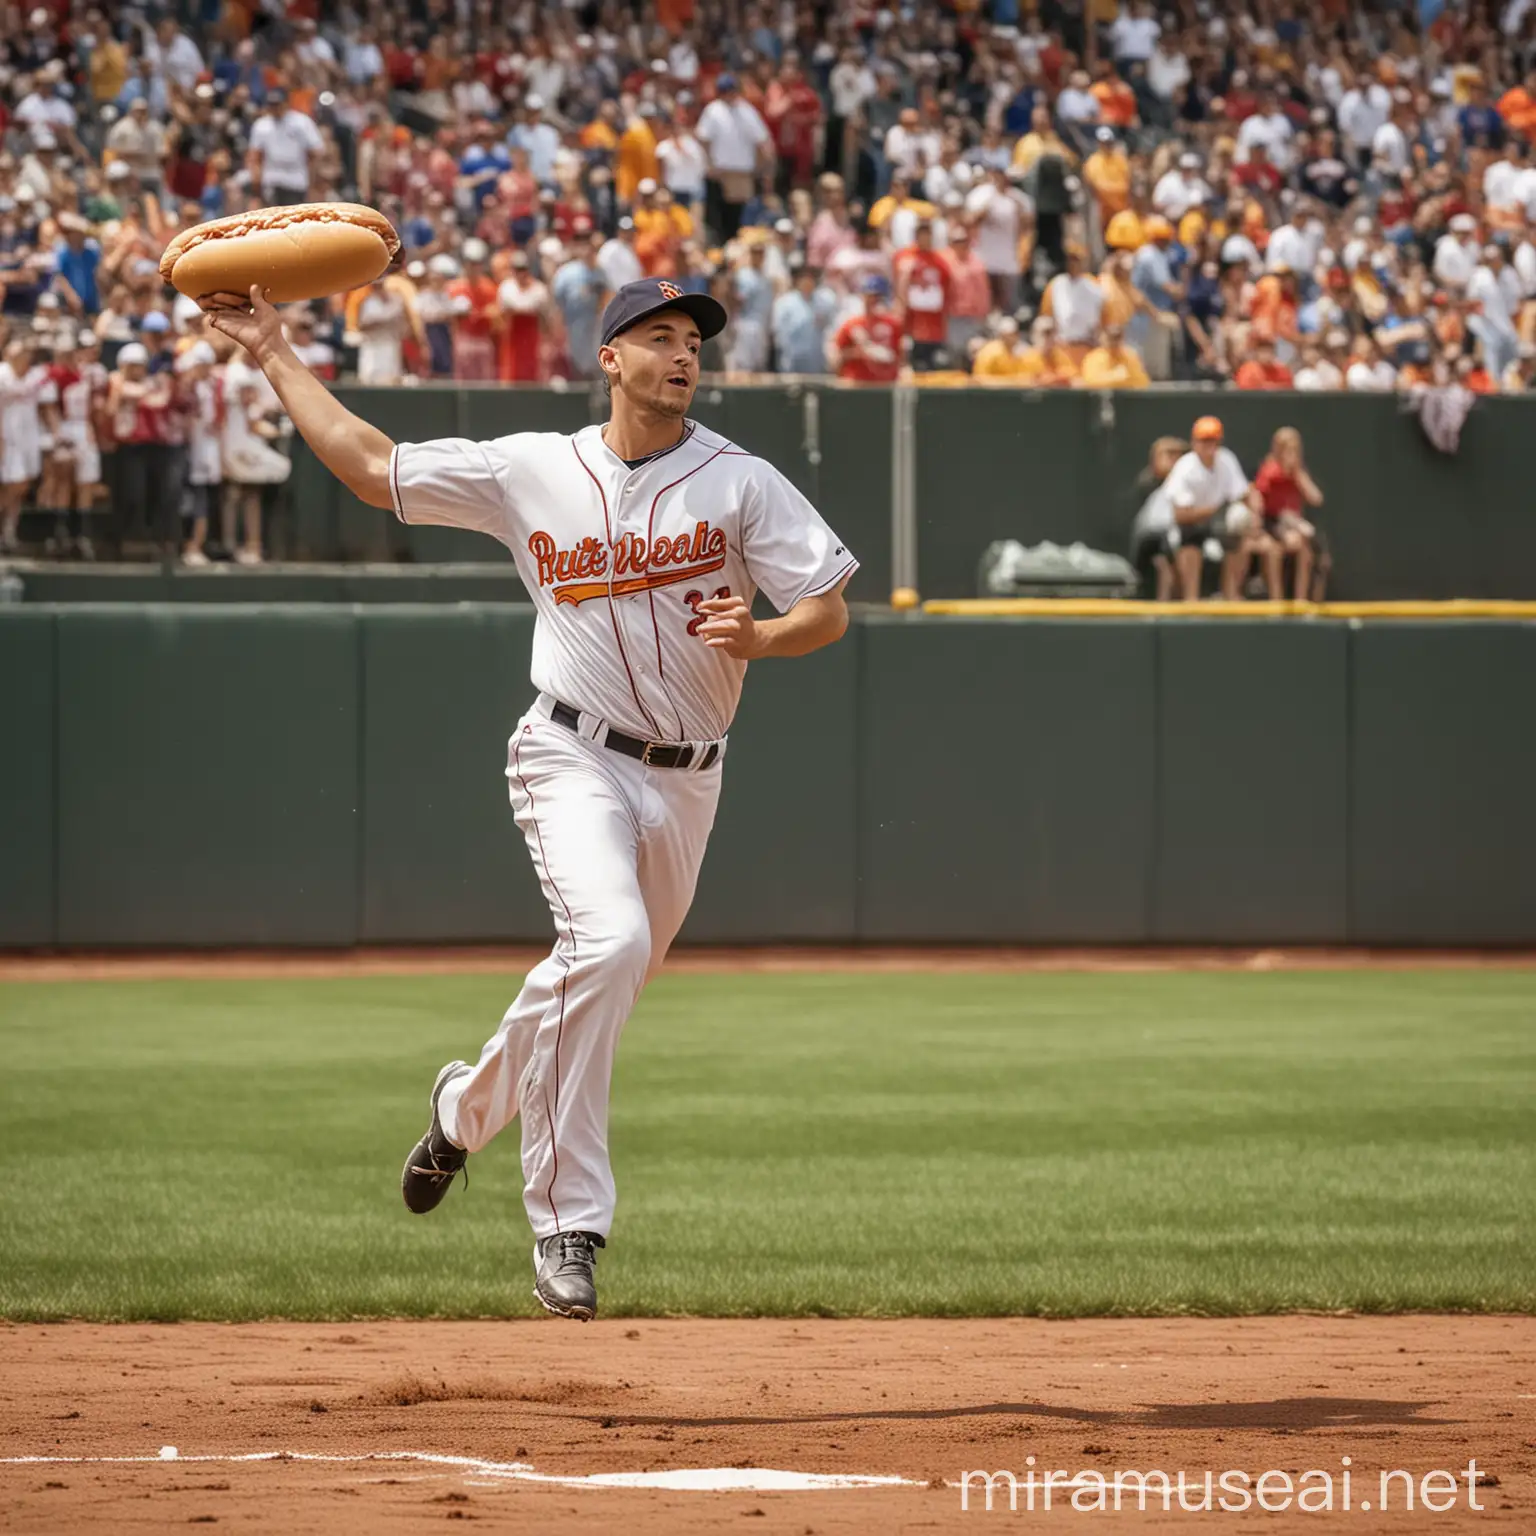 Dynamic Baseball Player Catching a Flying Hot Dog